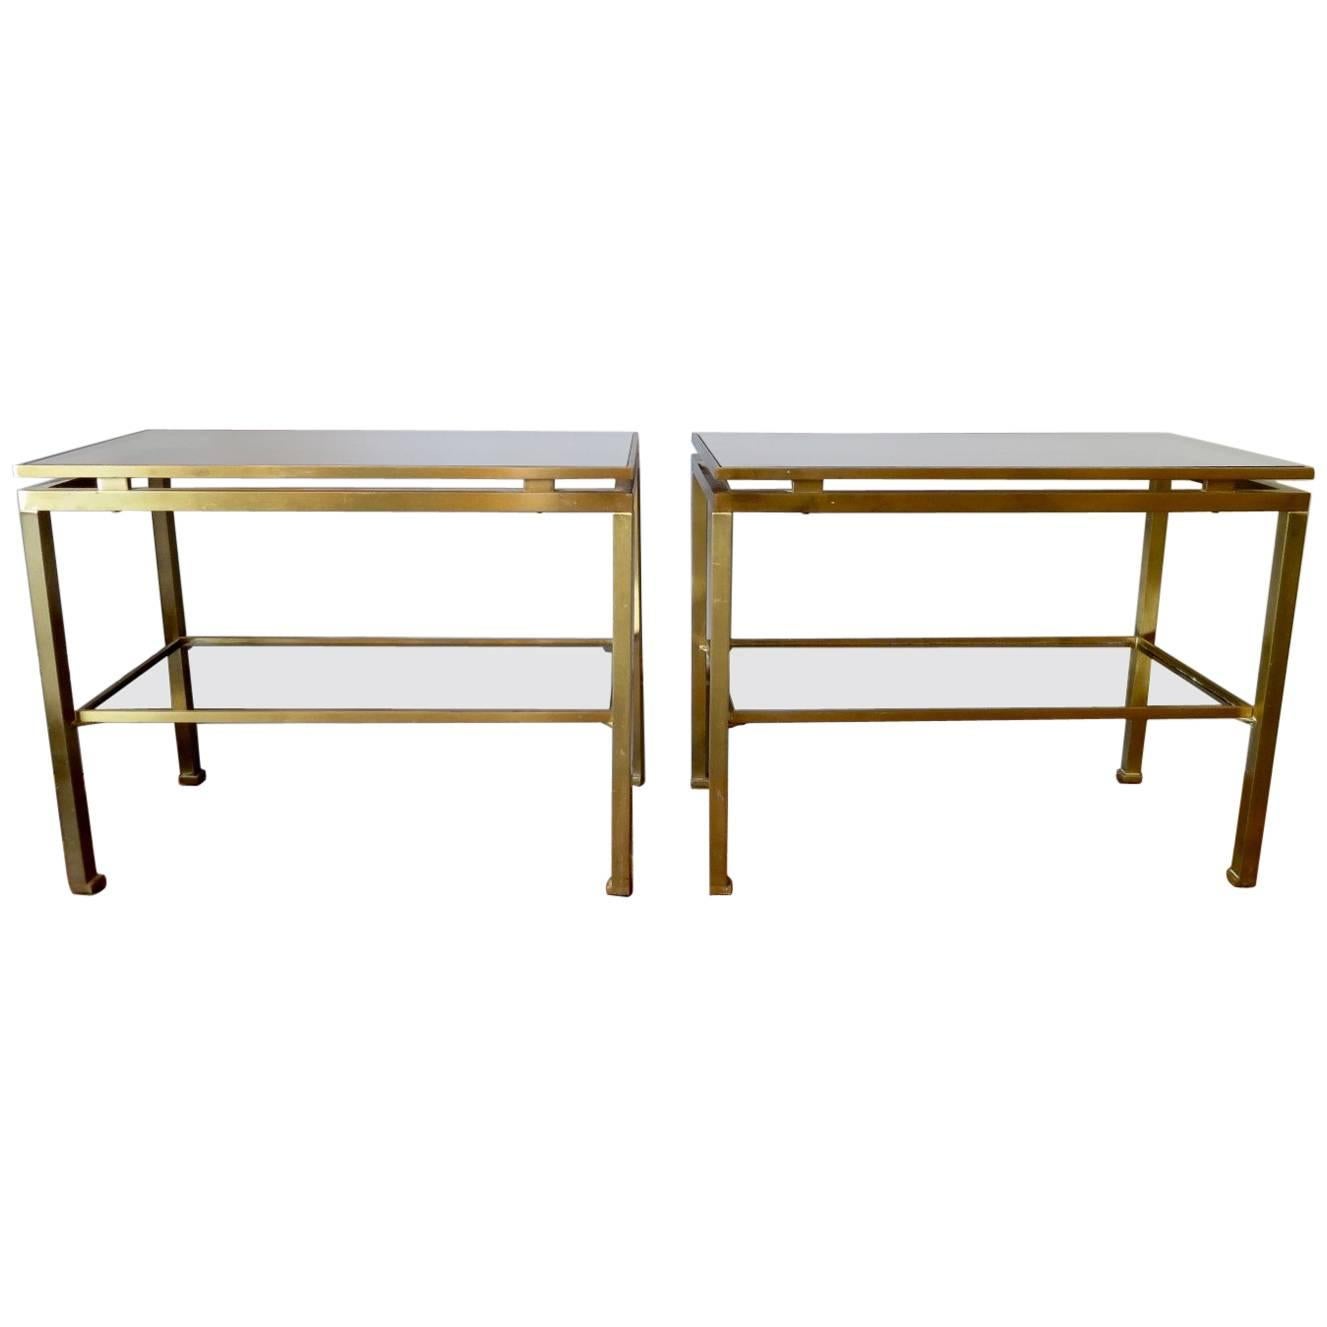 Pair of Brass Tables by Guy Lefevre for Maison Jansen